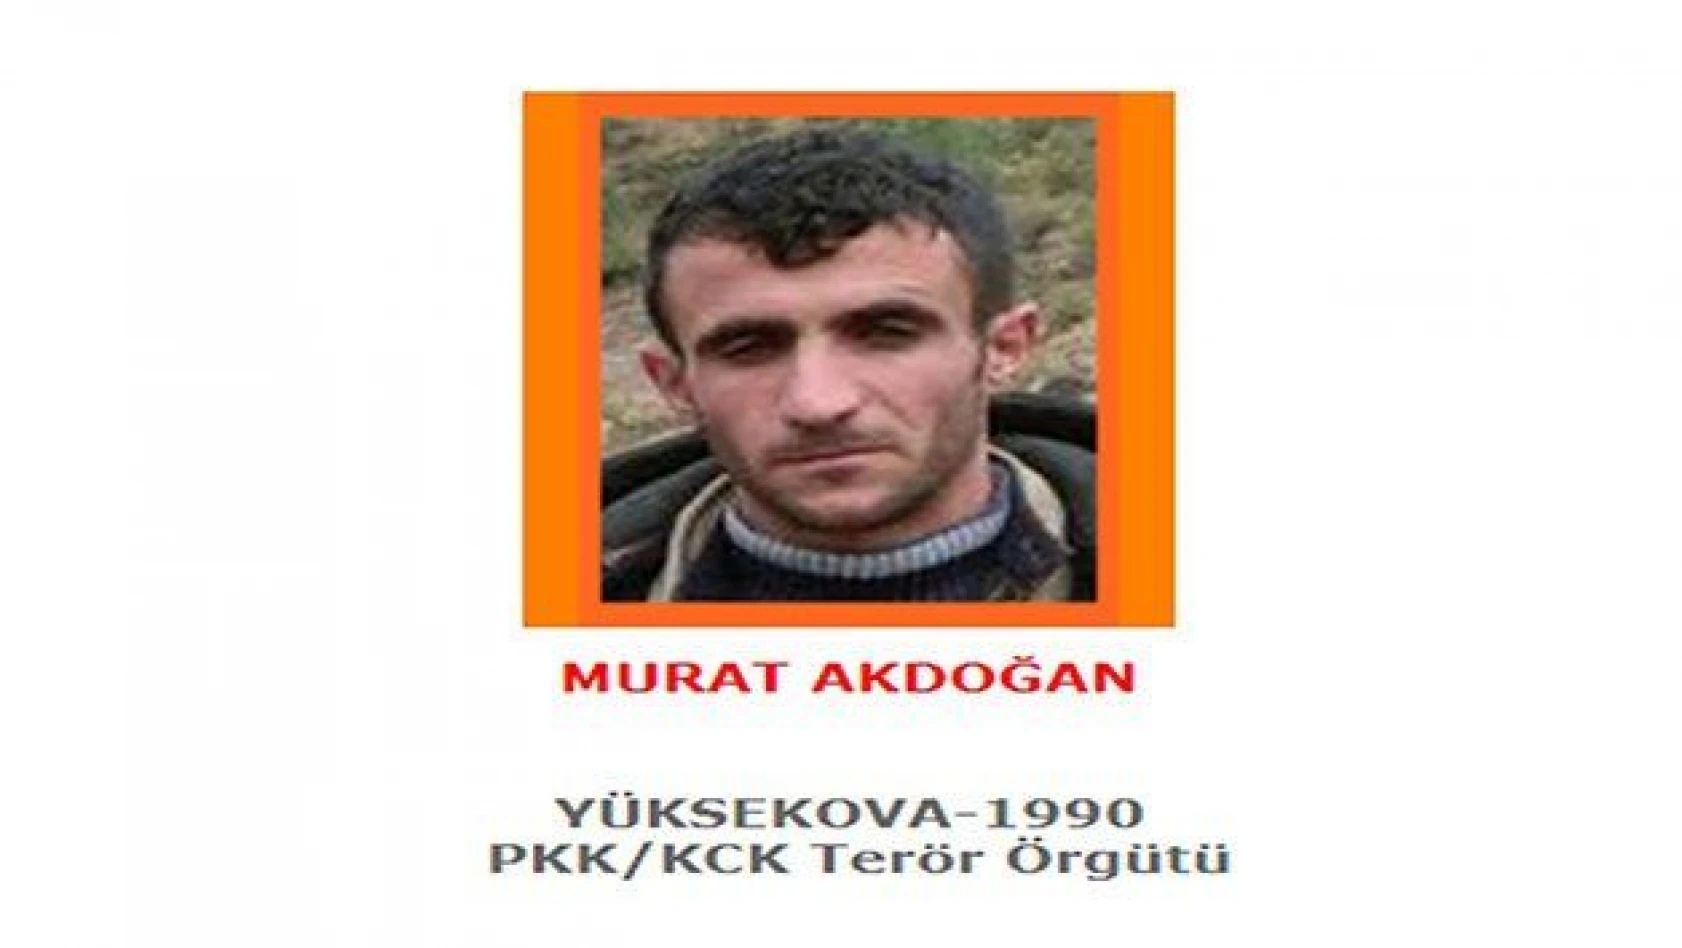 Turuncu listede yer alan terörist öldürüldü